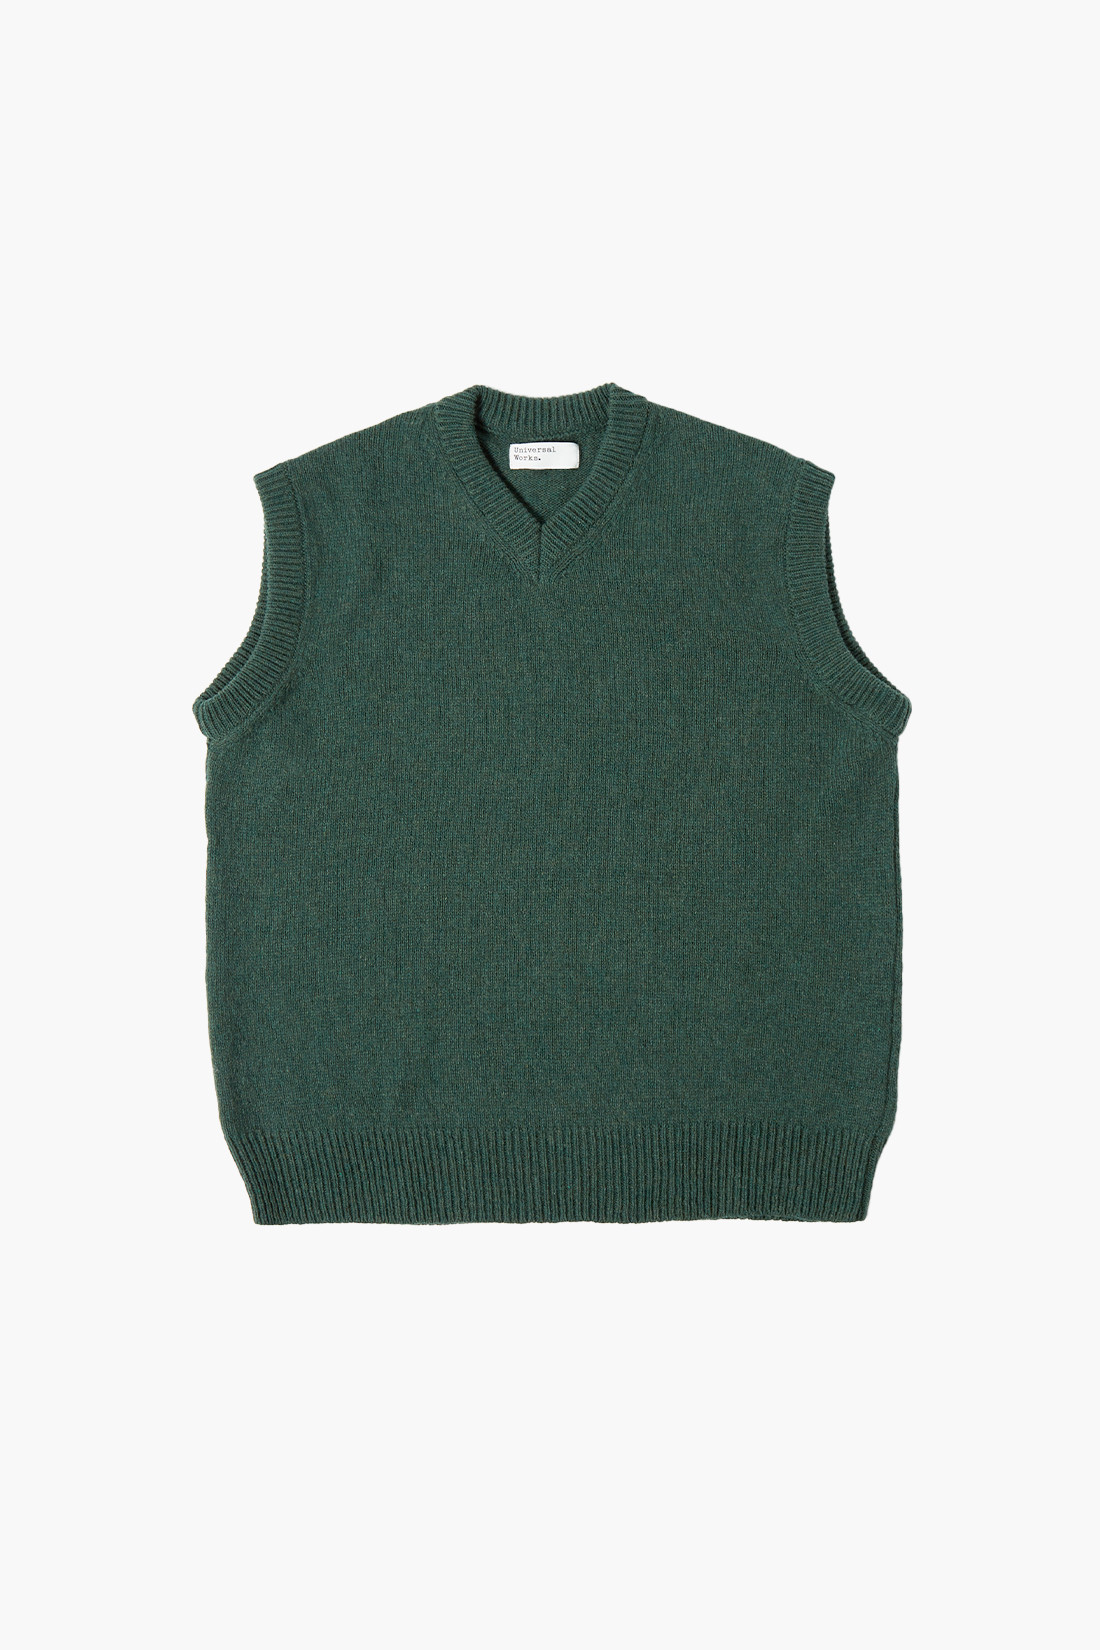 Universal works Sweater vest eco wool Olive - GRADUATE STORE